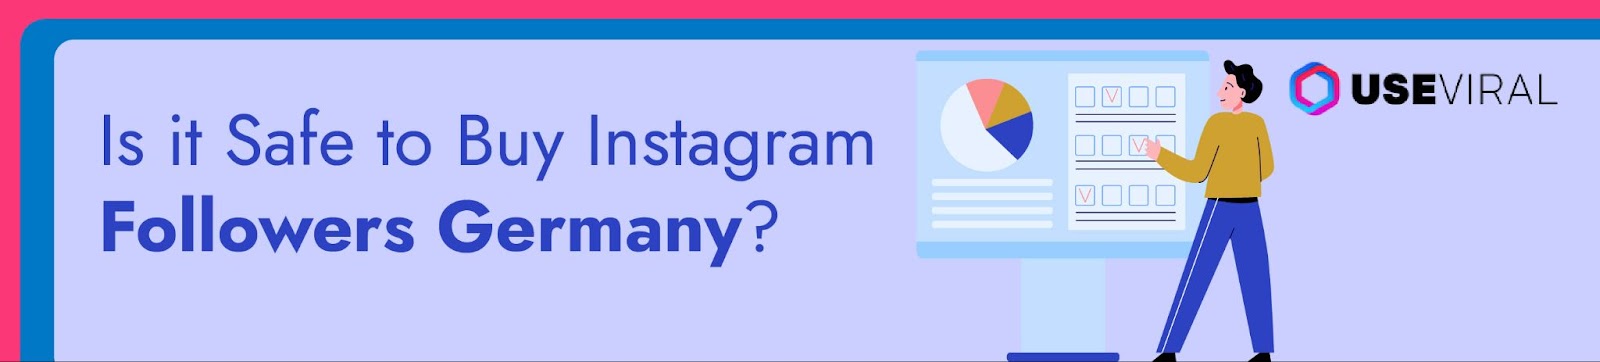 Is it Safe to Buy Instagram Followers Germany?